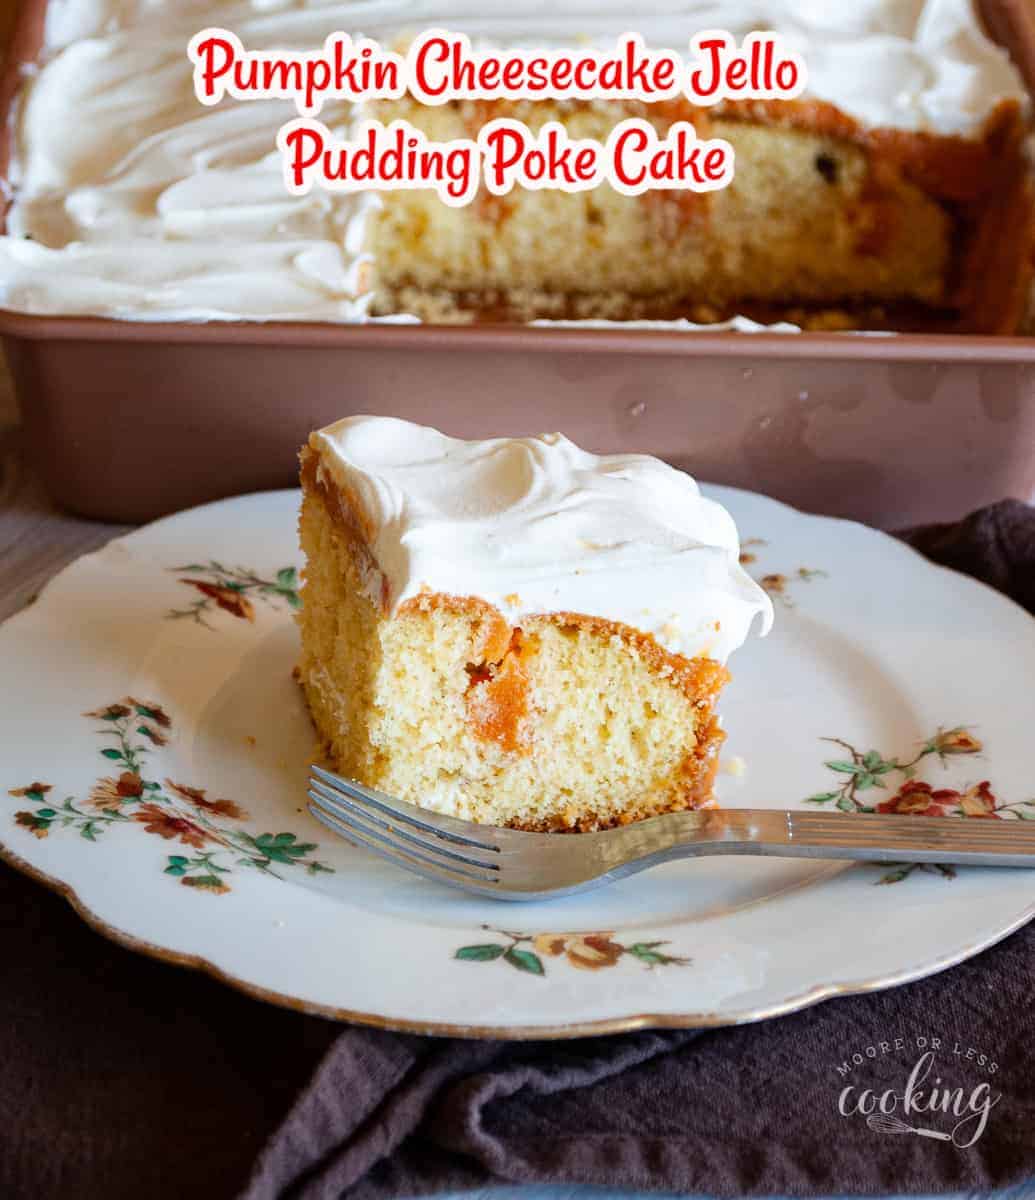 Pumpkin Cheesecake Jello Pudding Poke Cake